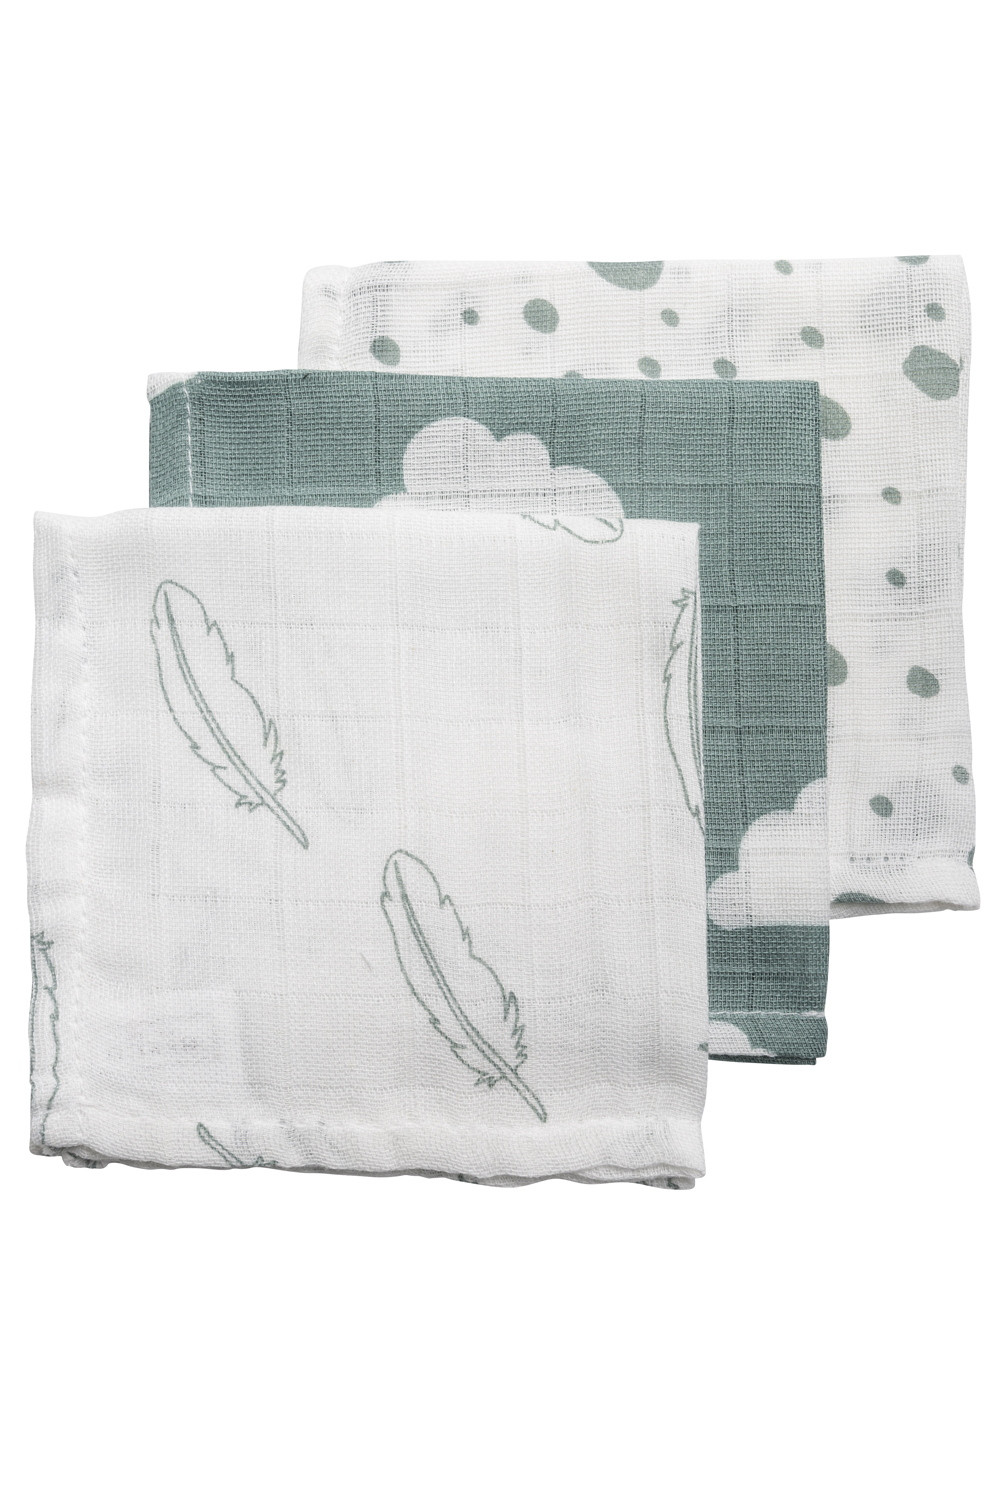 Monddoekjes 3-pack hydrofiel Clouds/Dots/Feathers - stone green - 30x30cm